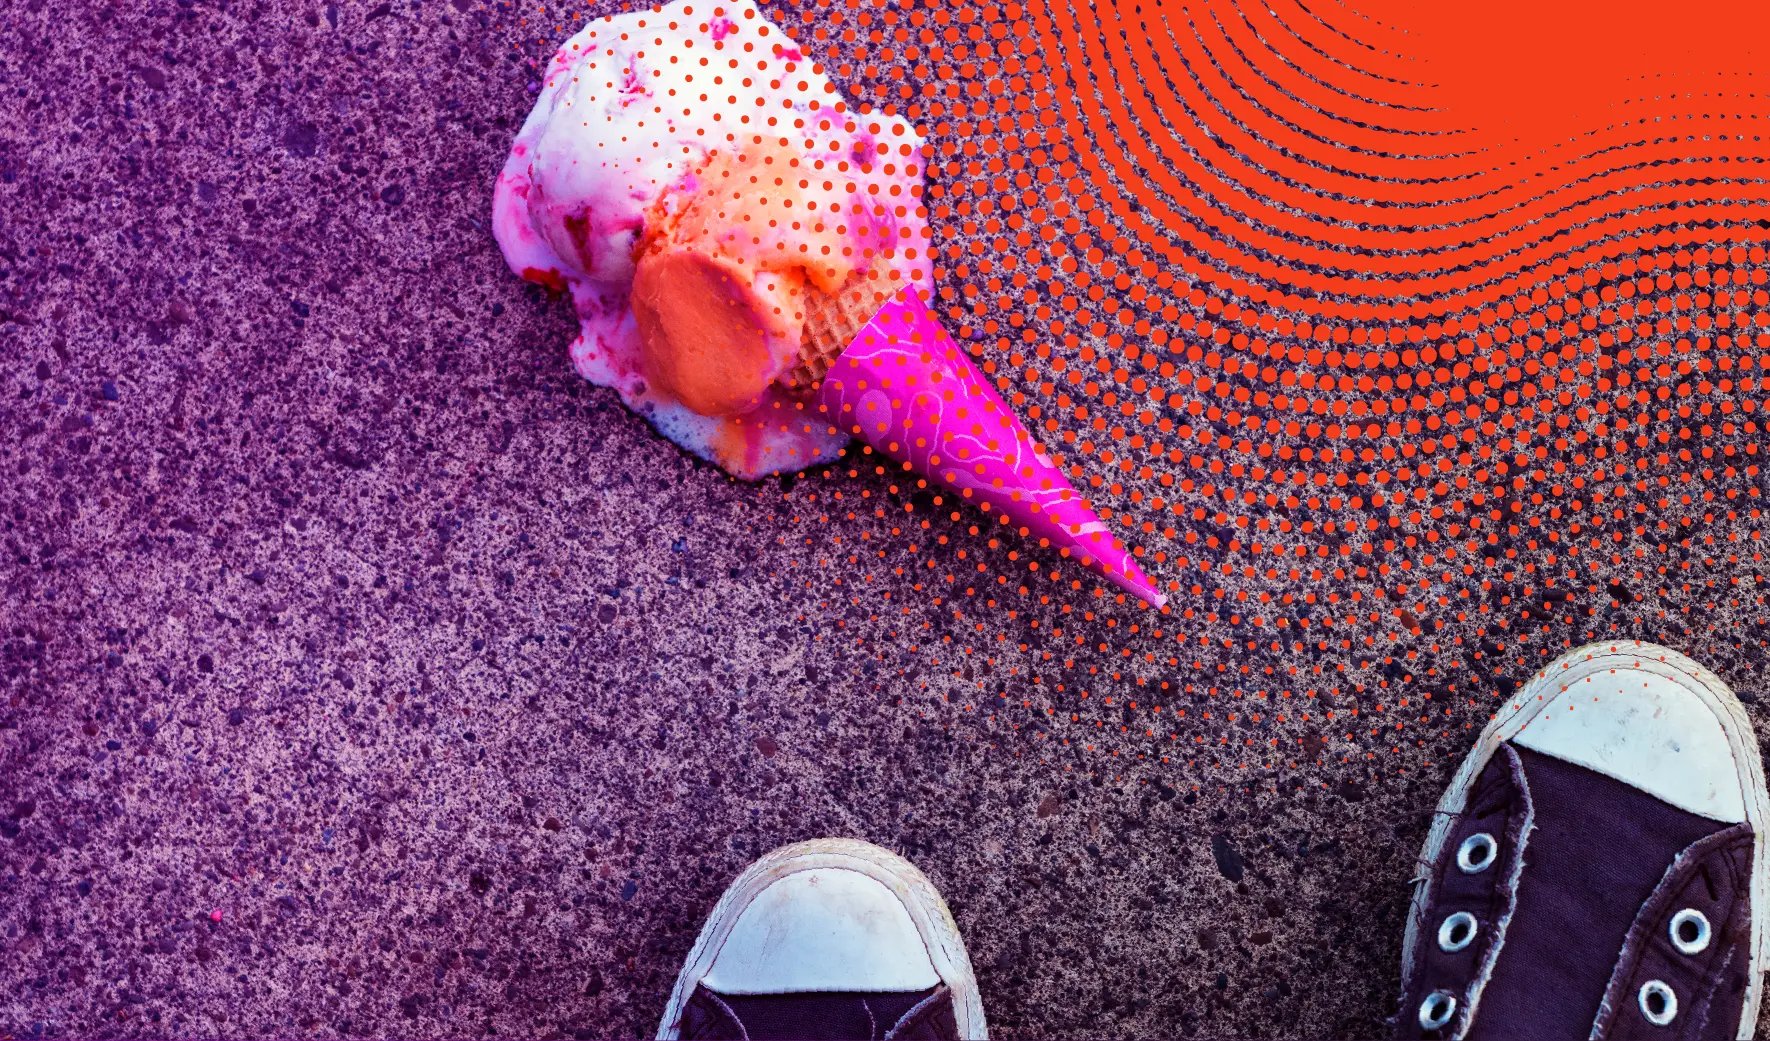 Ice-cream cone dropped on the floor